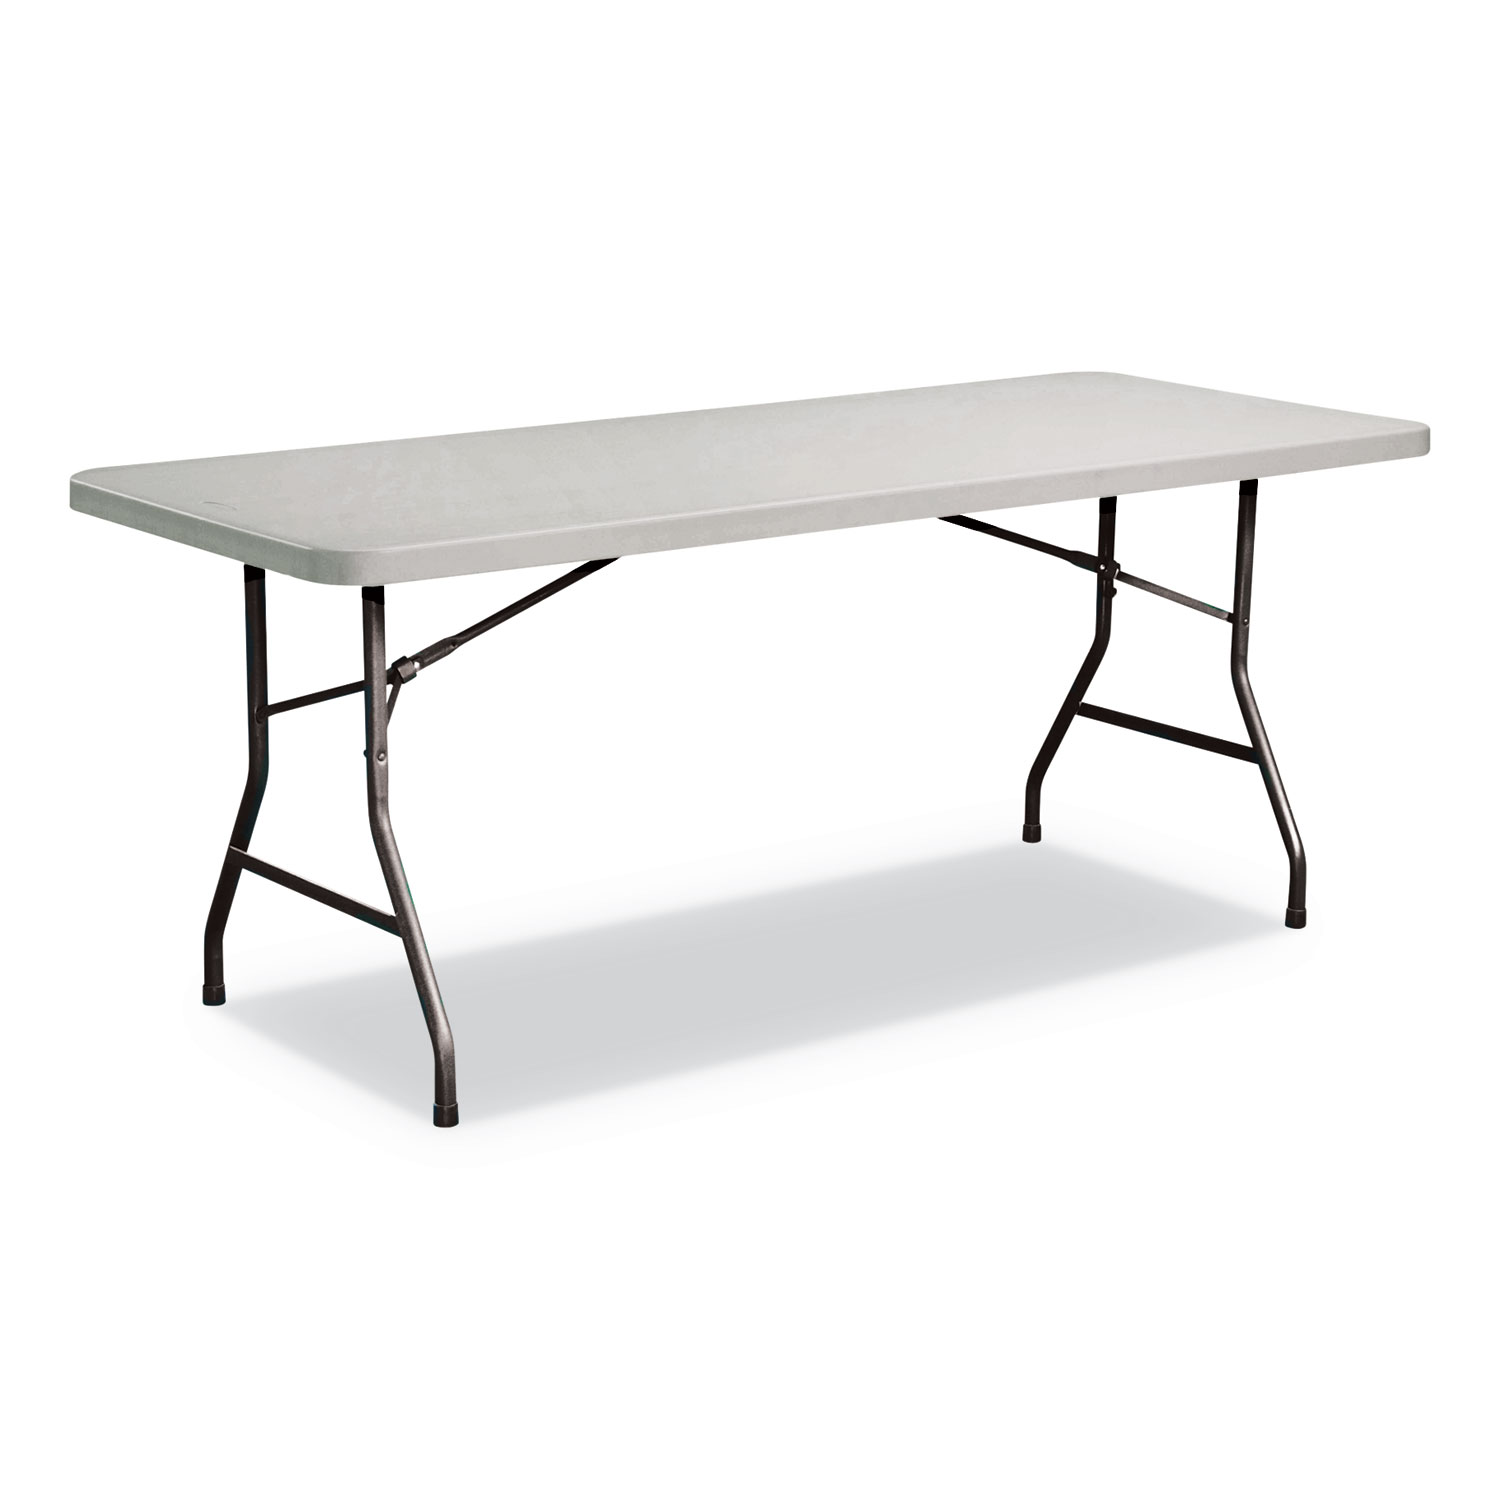  Alera ALEPT7230G Rectangular Plastic Folding Table, 72w x 29 5/8d x 29 1/4h, Gray (ALEPT7230G) 